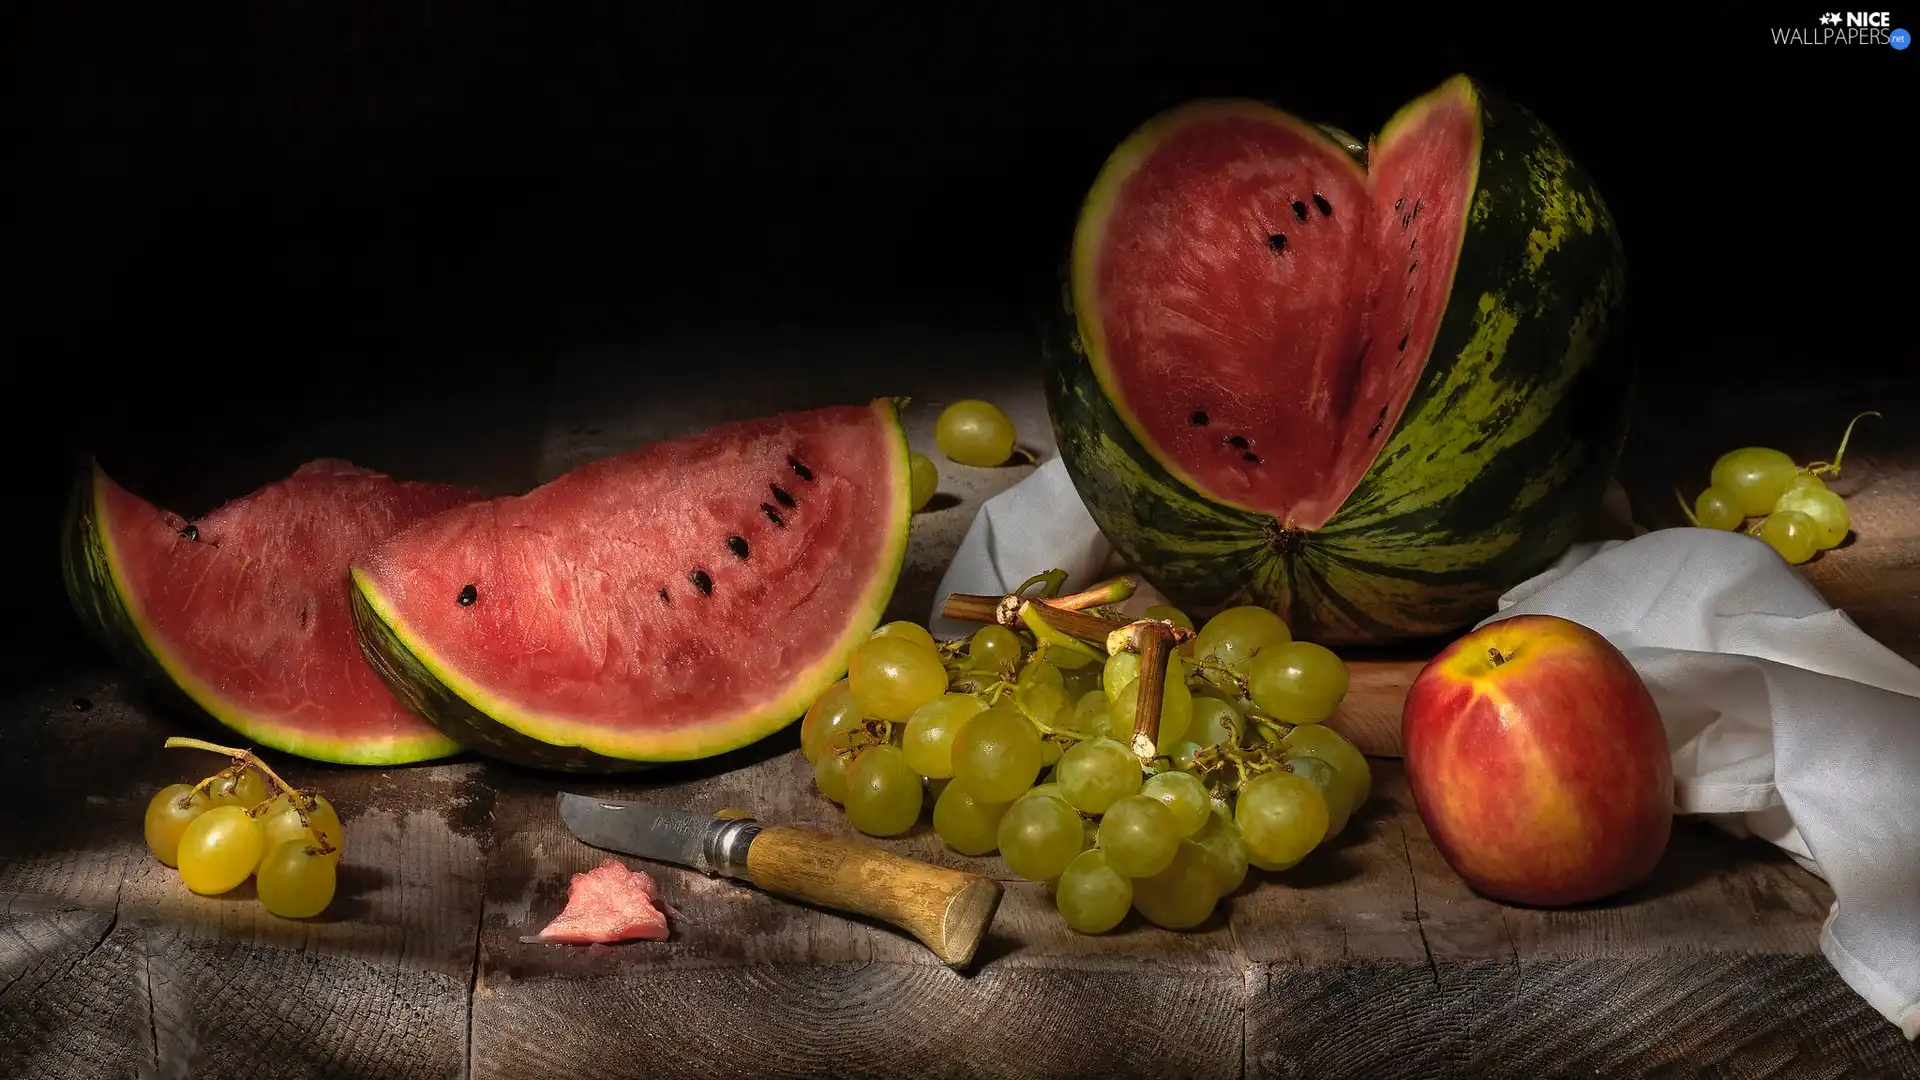 Apple, watermelon, boarding, Grapes, Fruits, knife, napkin